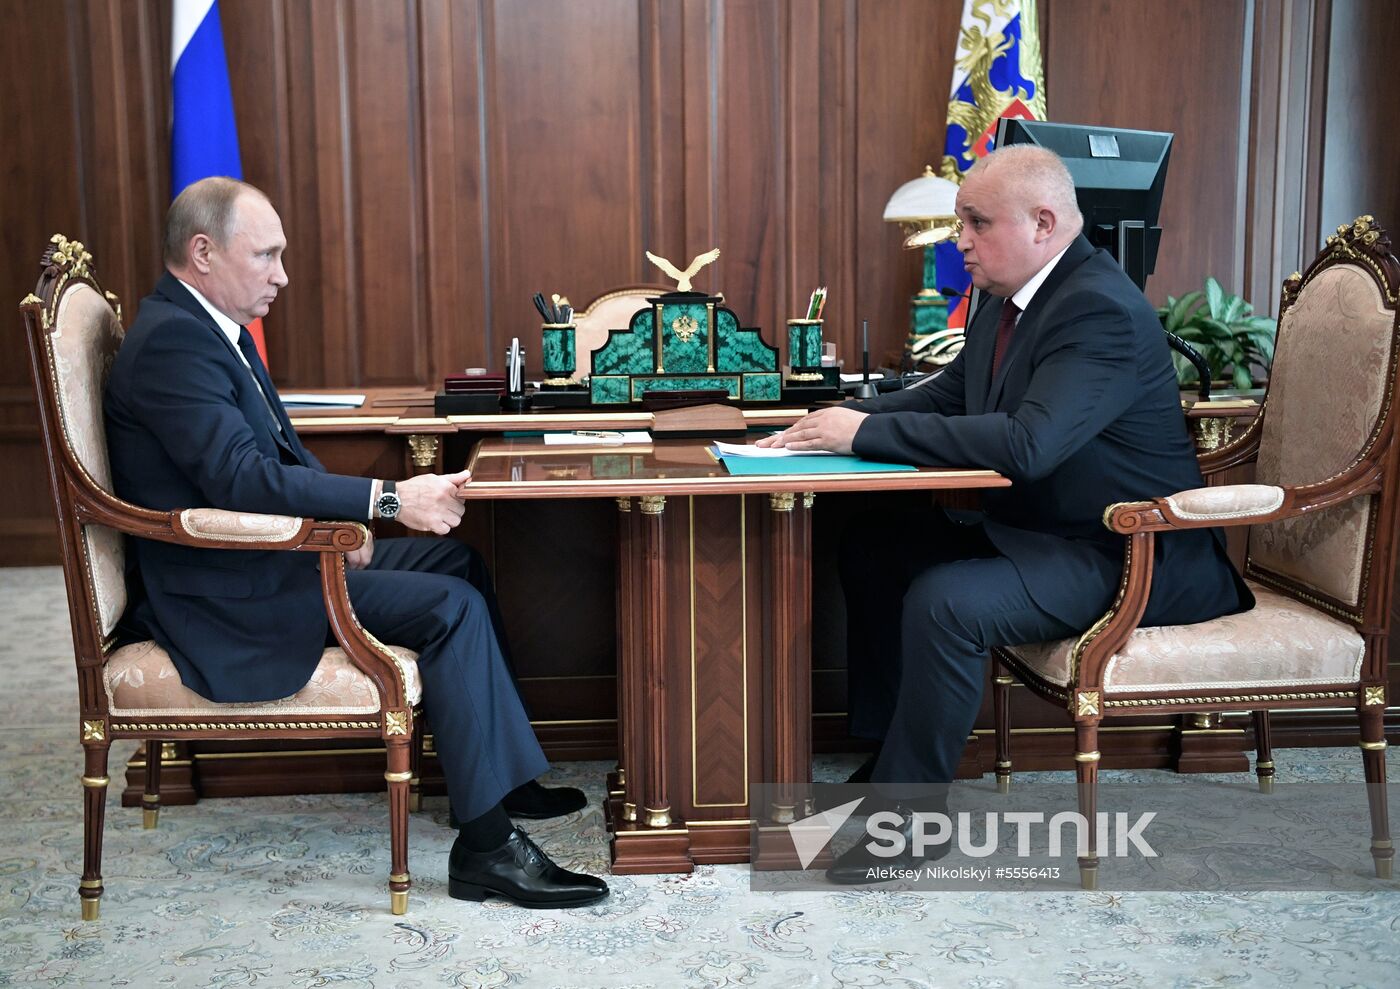 President Putin meets with Kemerovo Region Acting Governor Tsivilyov